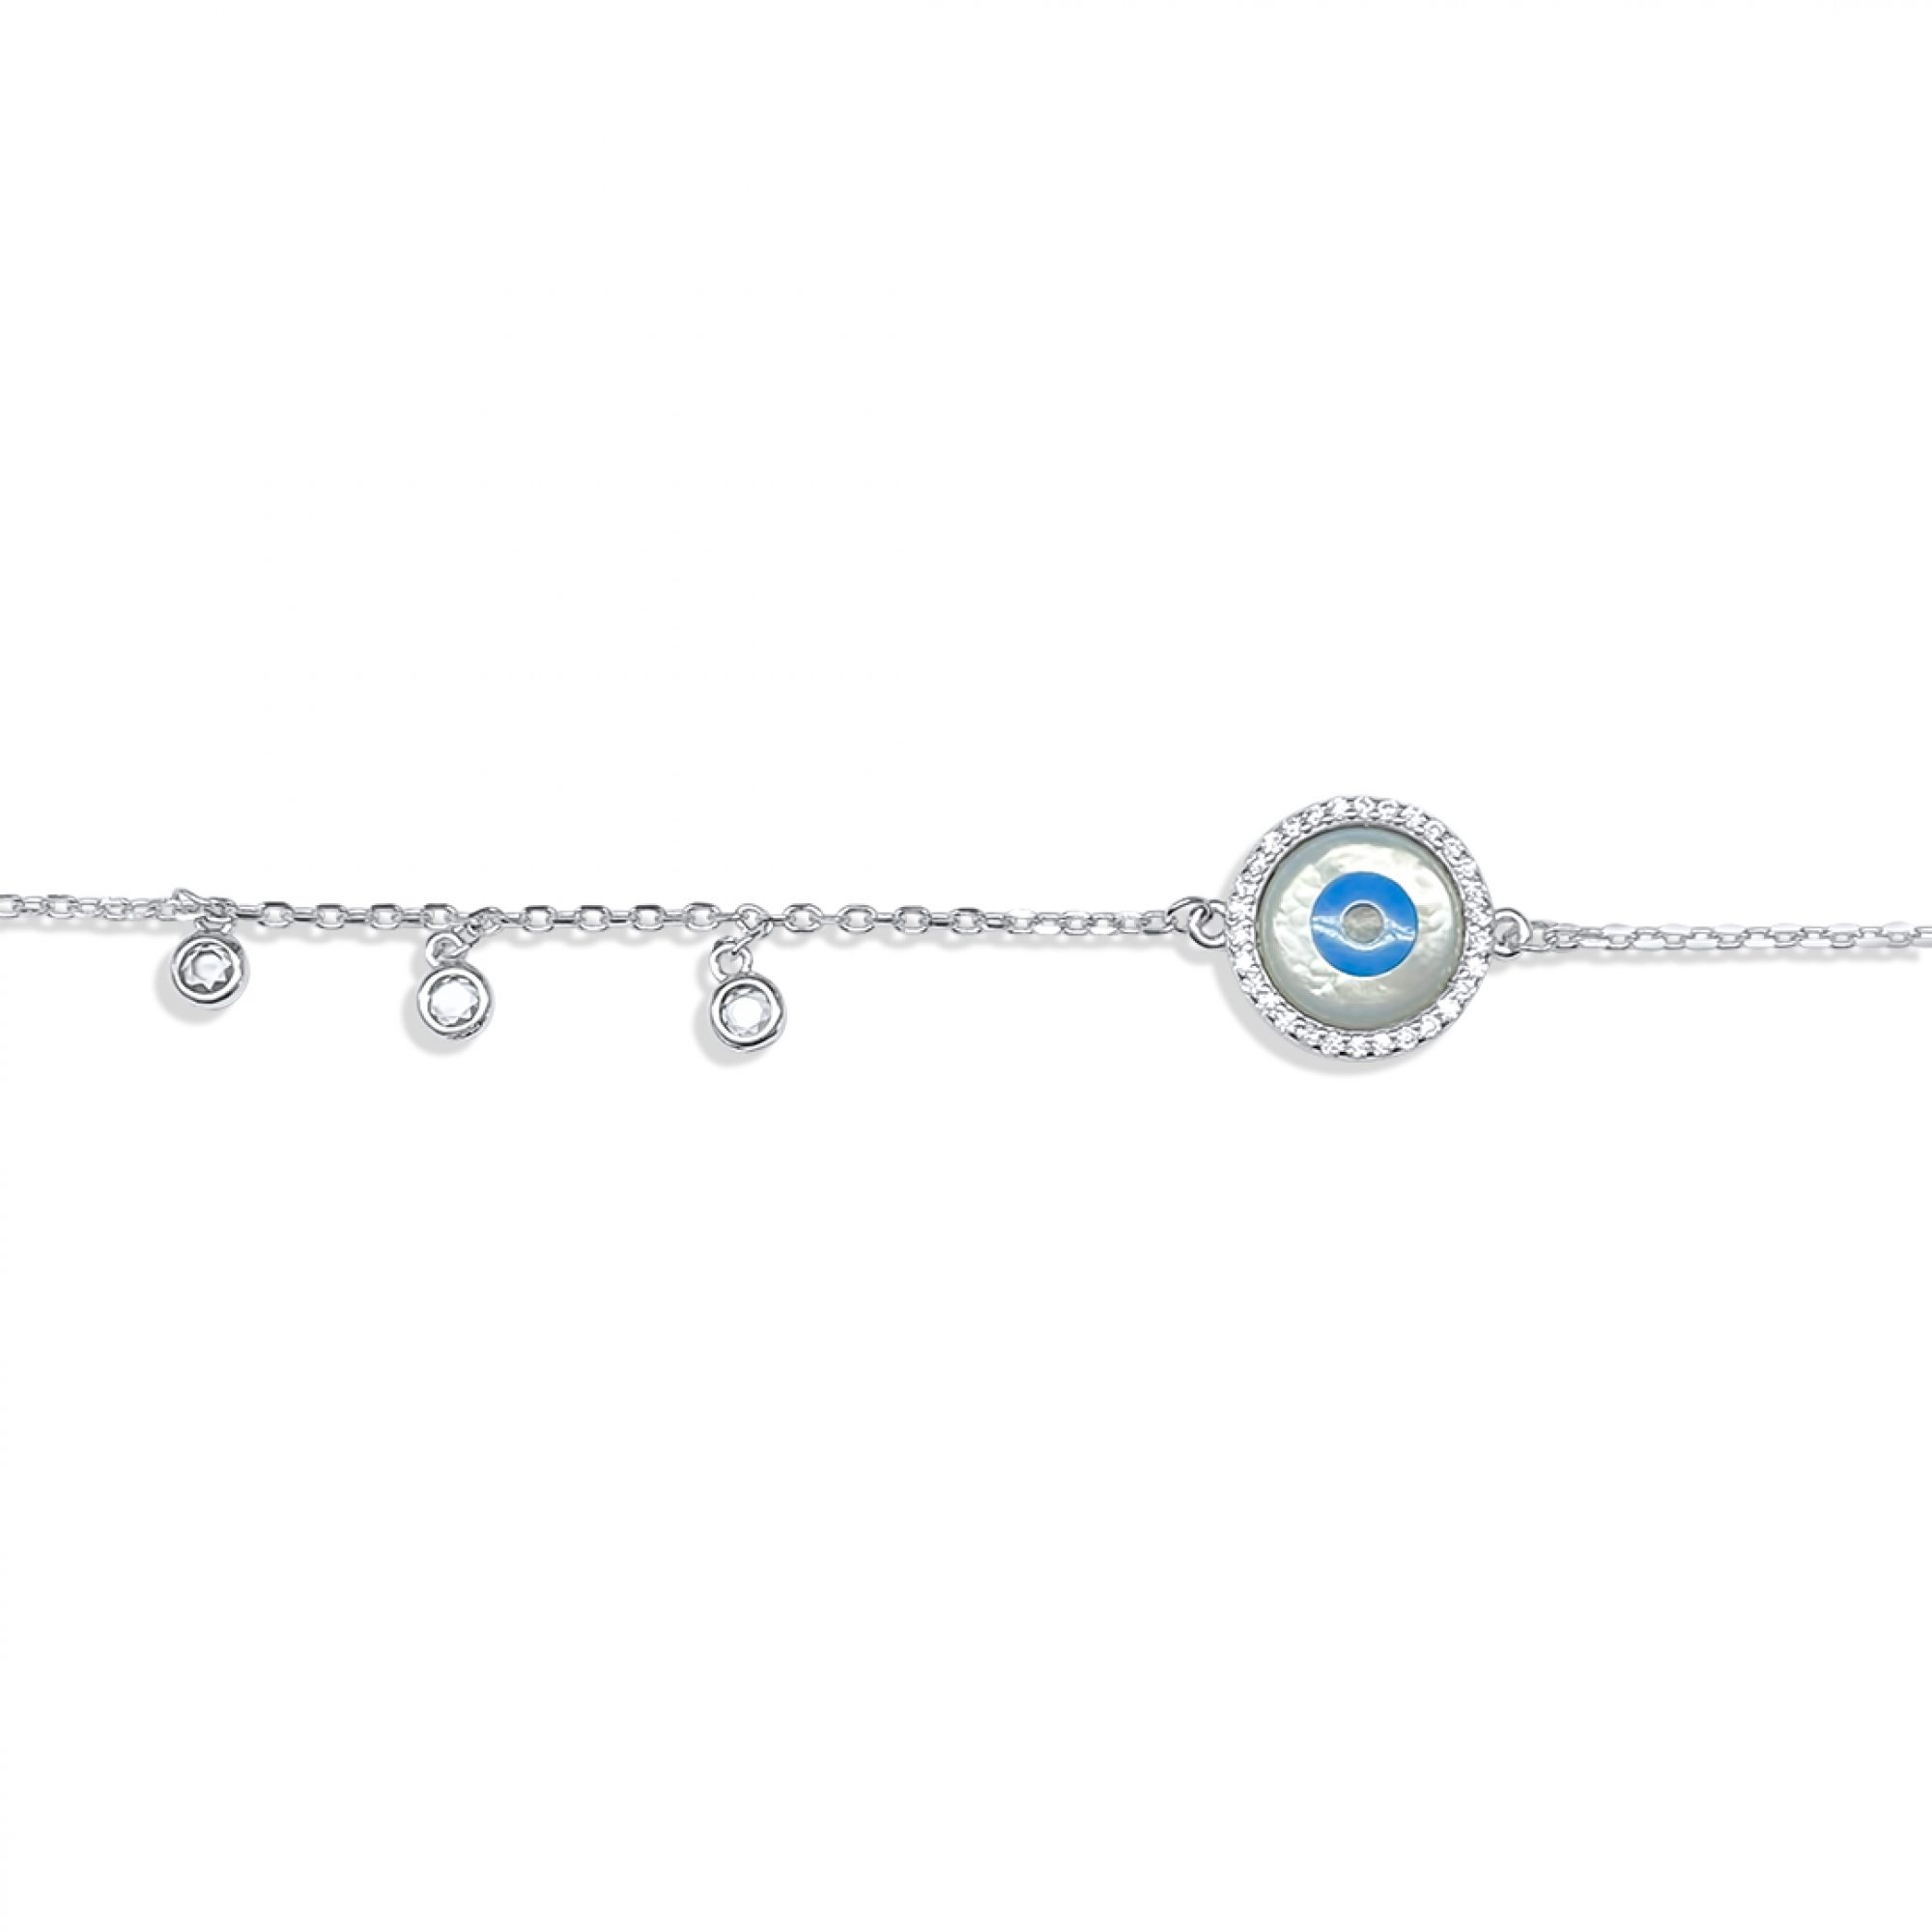 Eye bracelet with zircon and turquoise stones